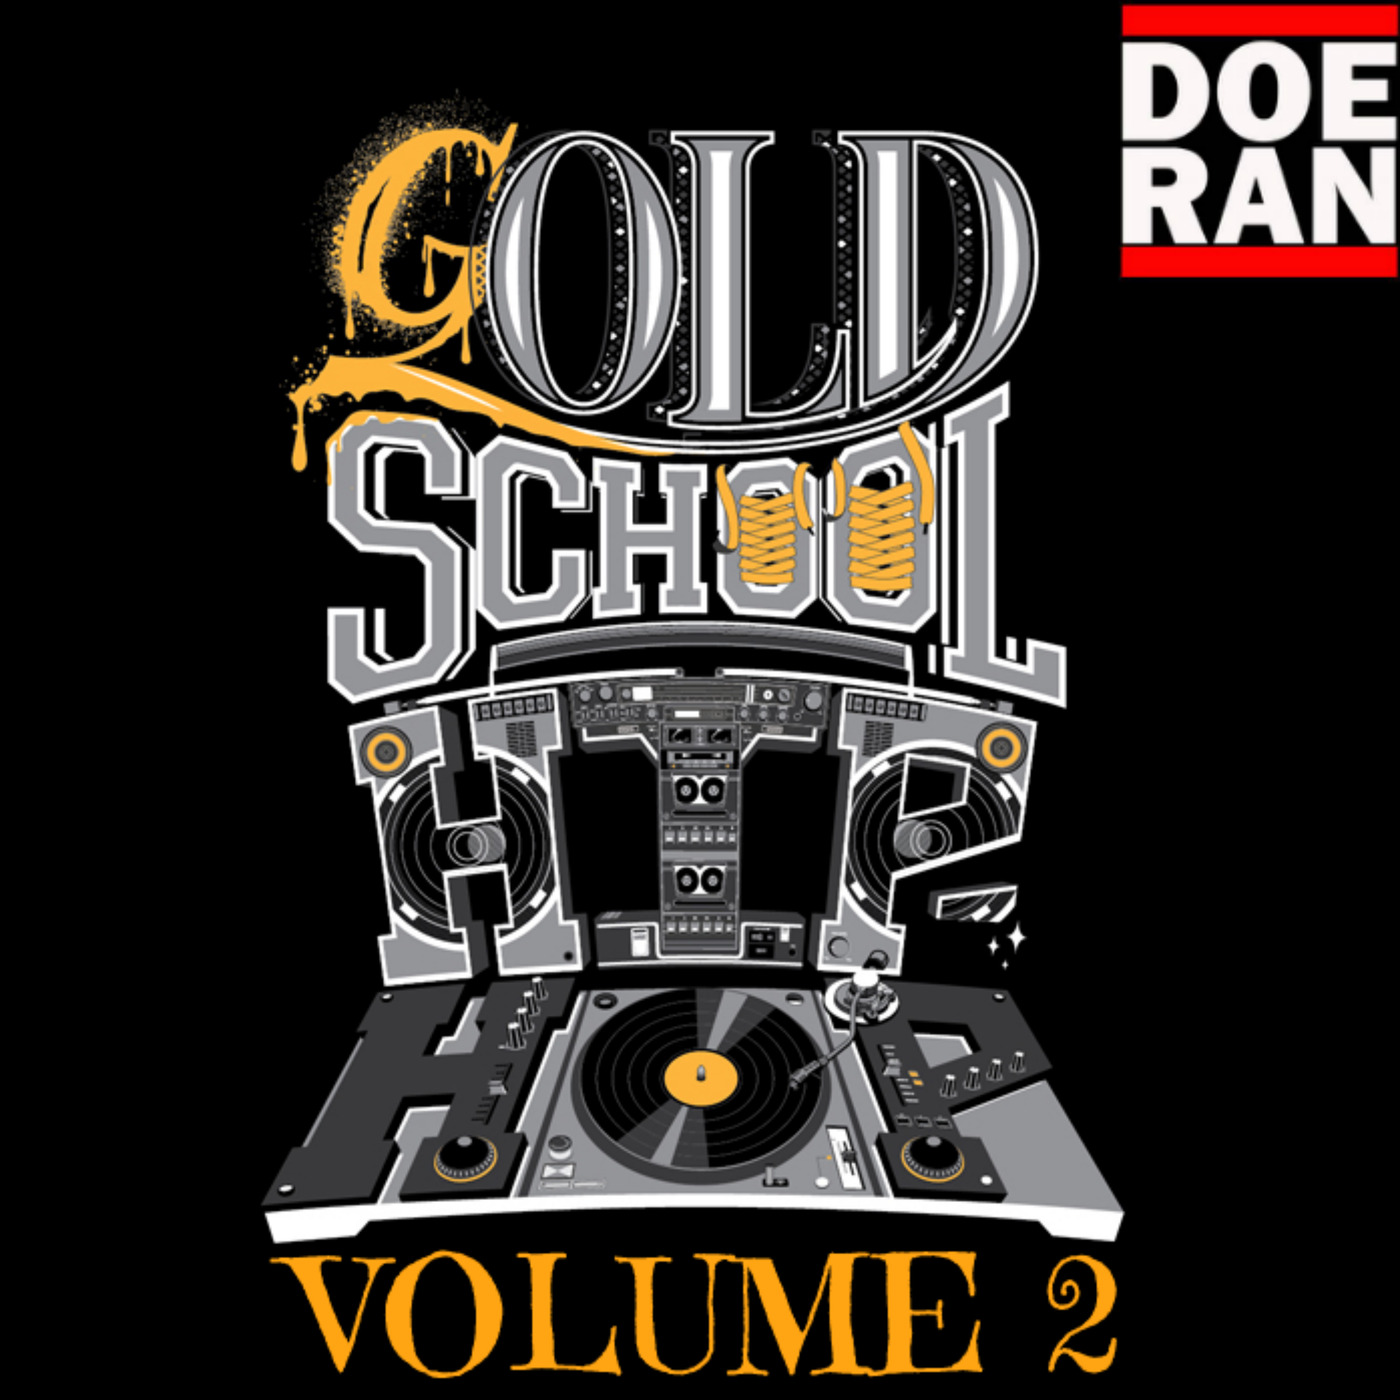 Doe-ran - The Golden Age of Hip-Hop Vol. 2